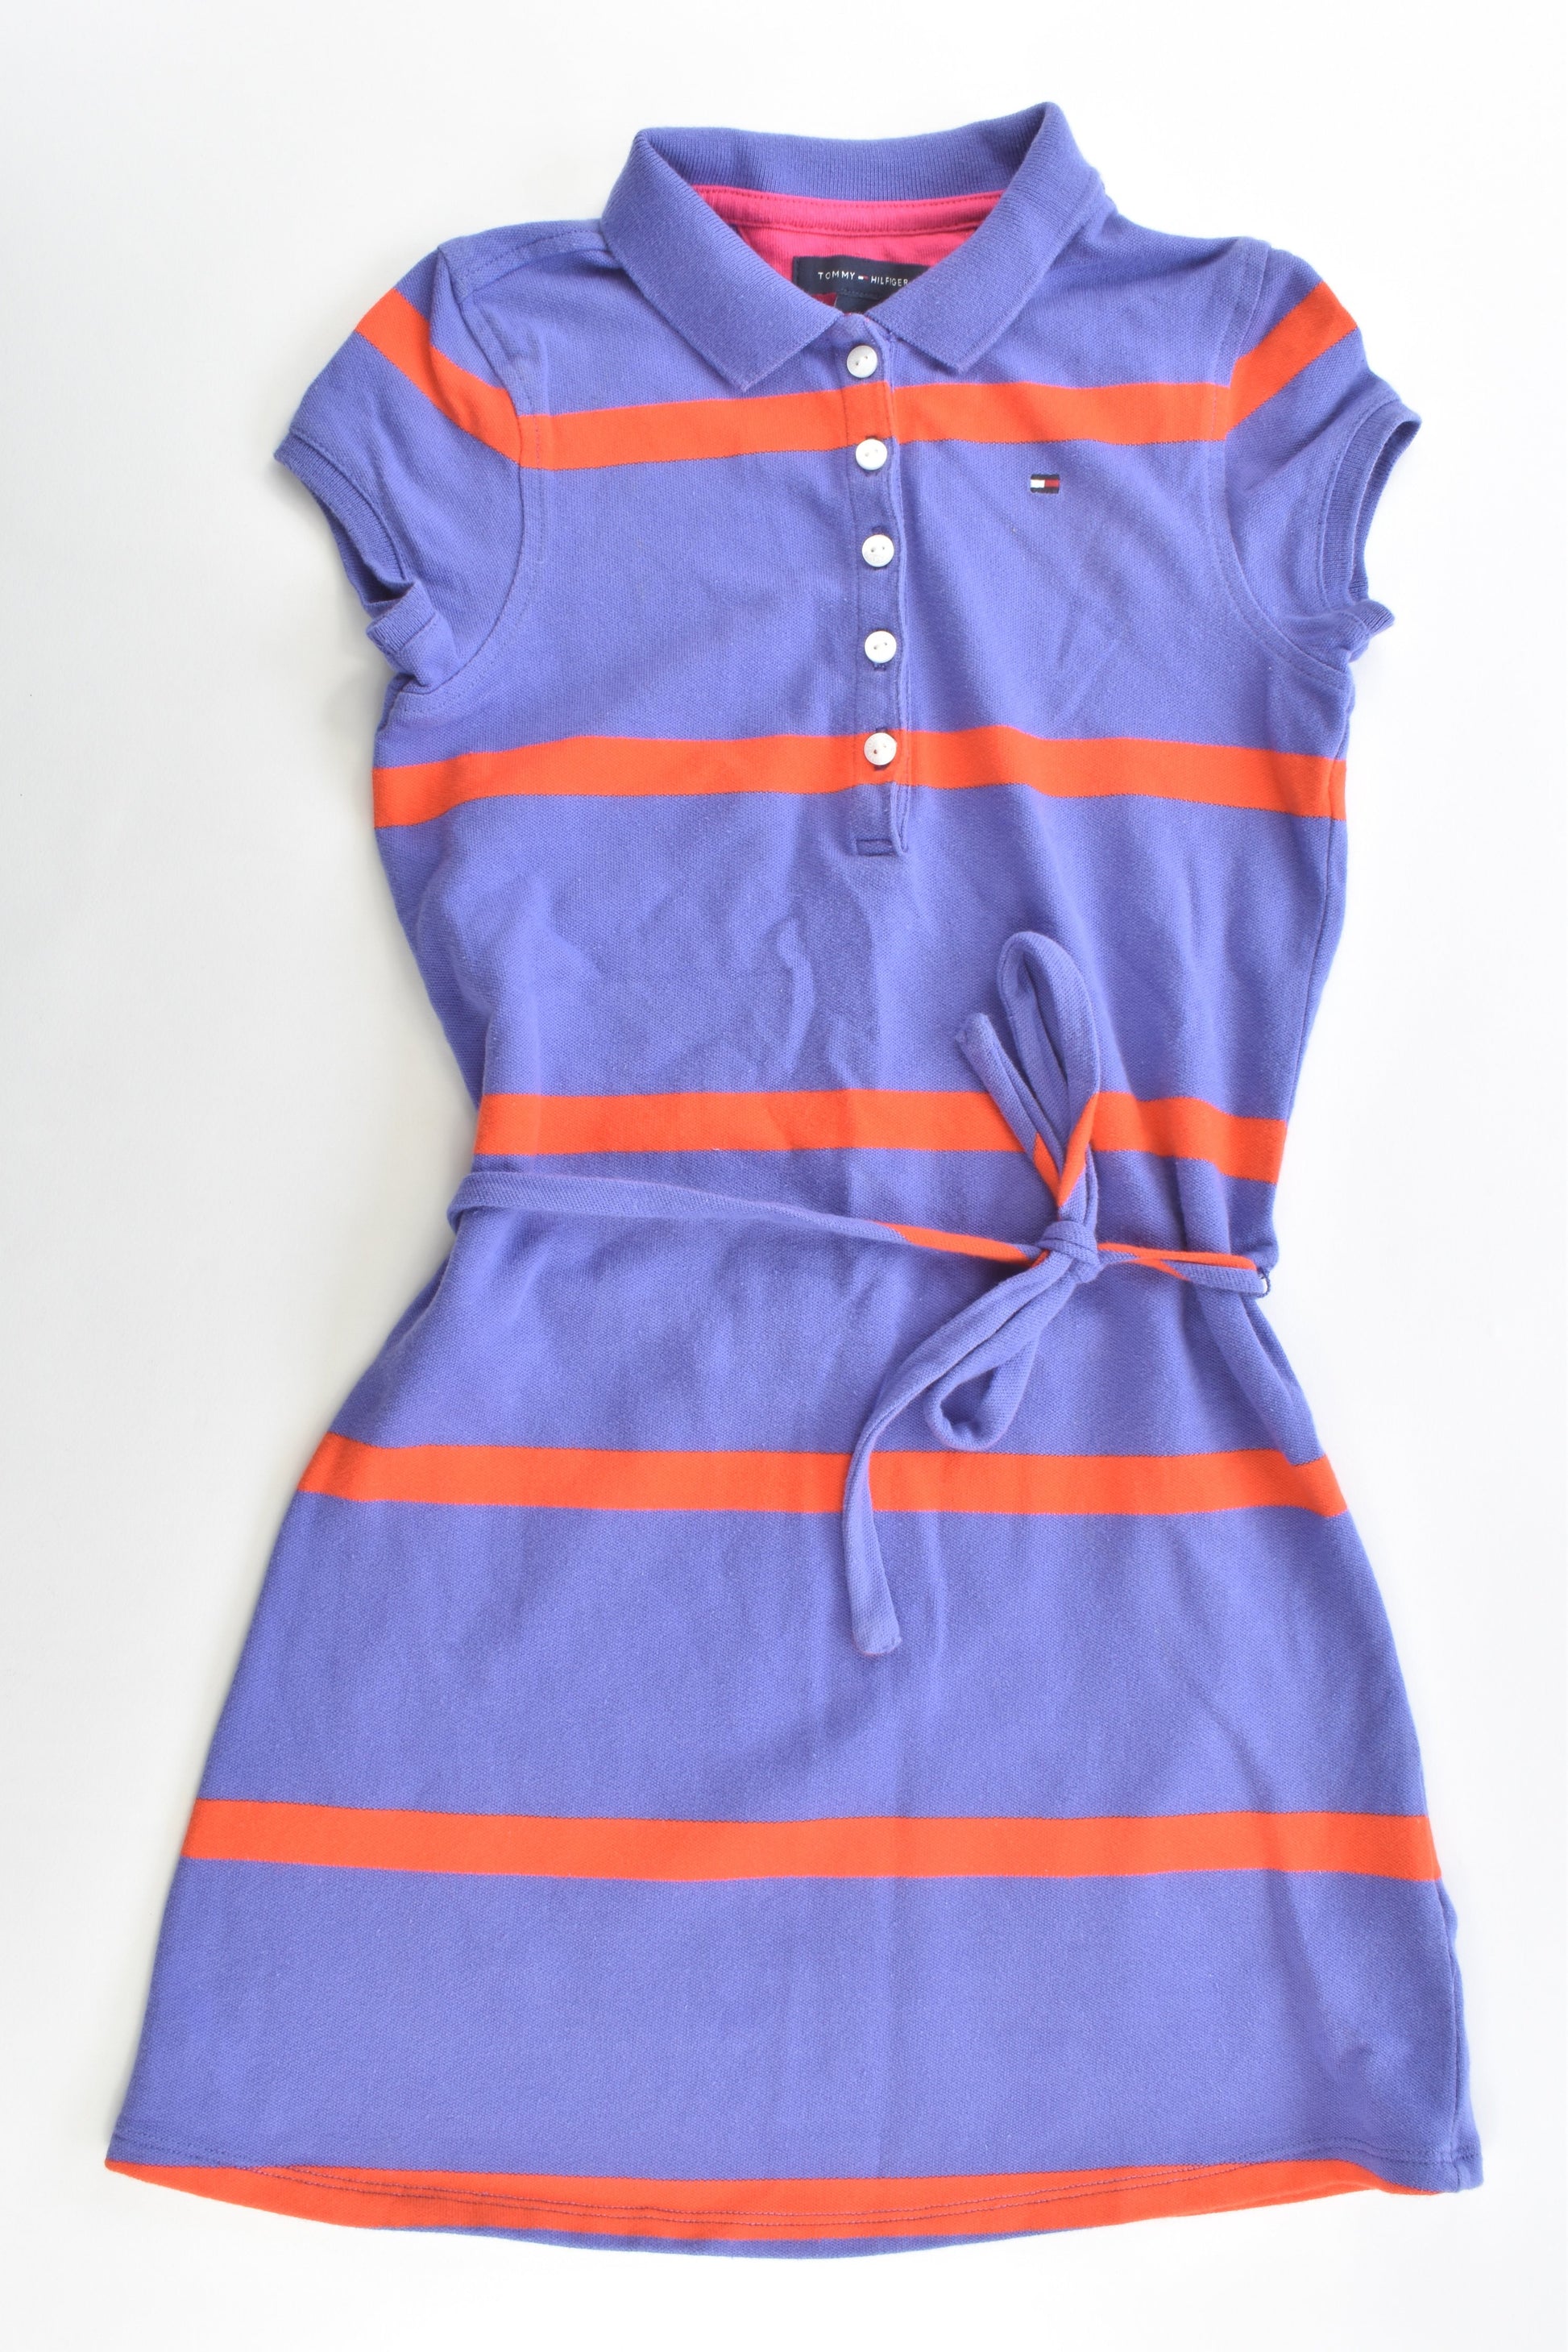 Tommy Hilfiger Size 6-7 Striped Dress with Belt